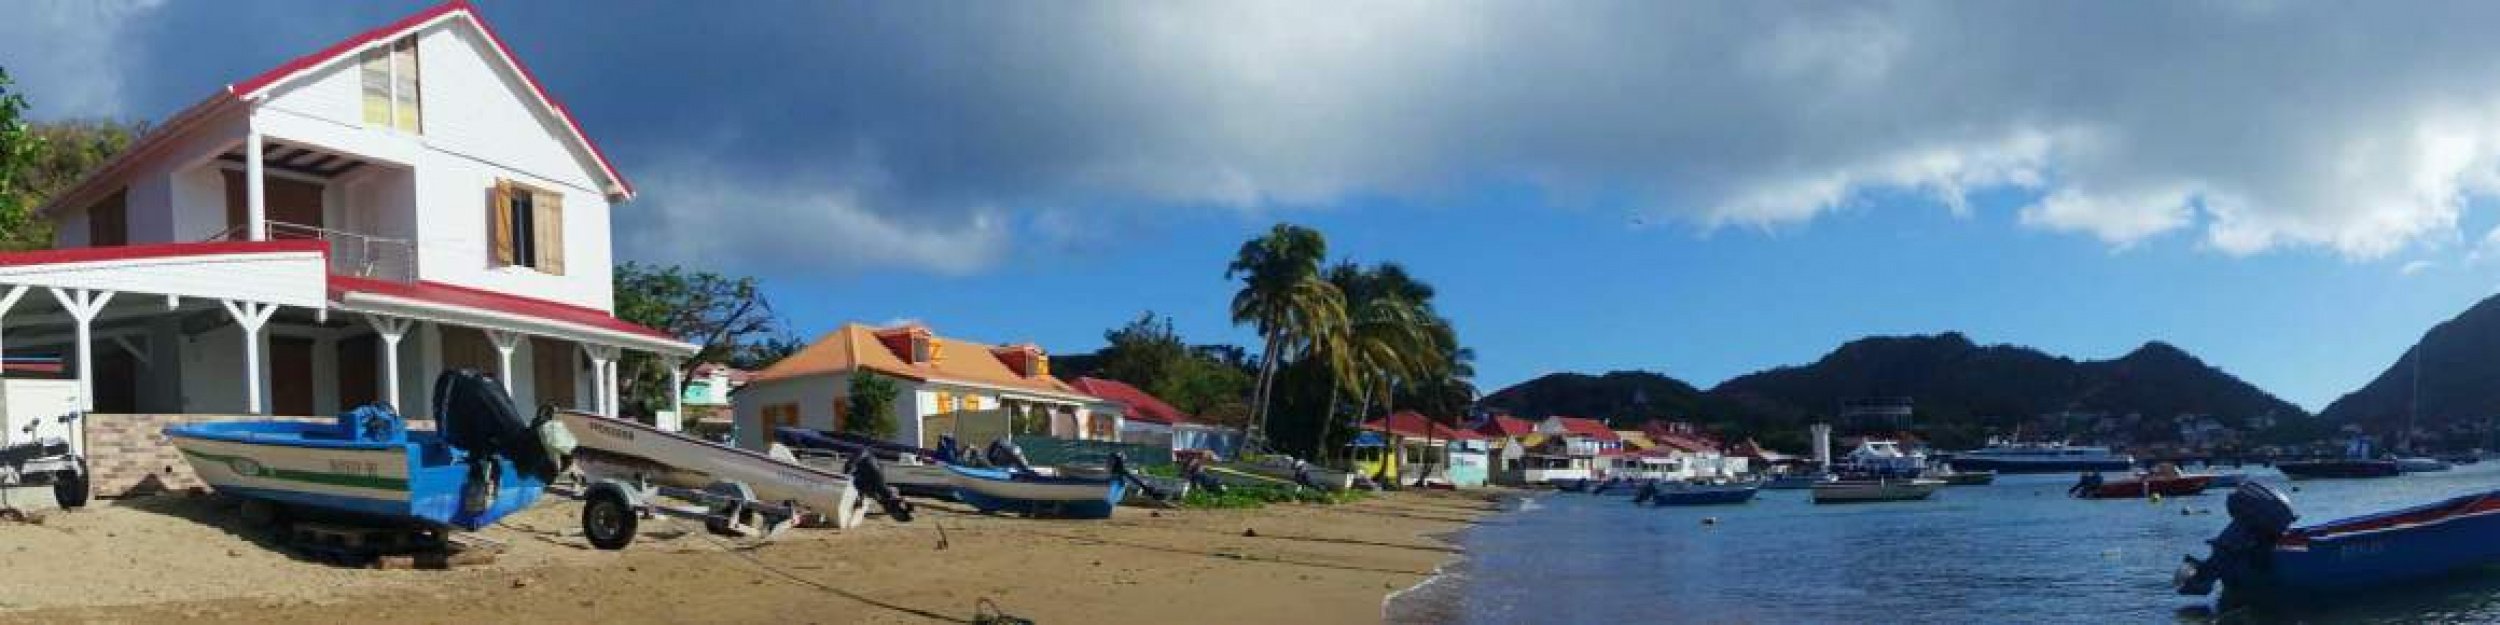 Location de bateau en Guadeloupe